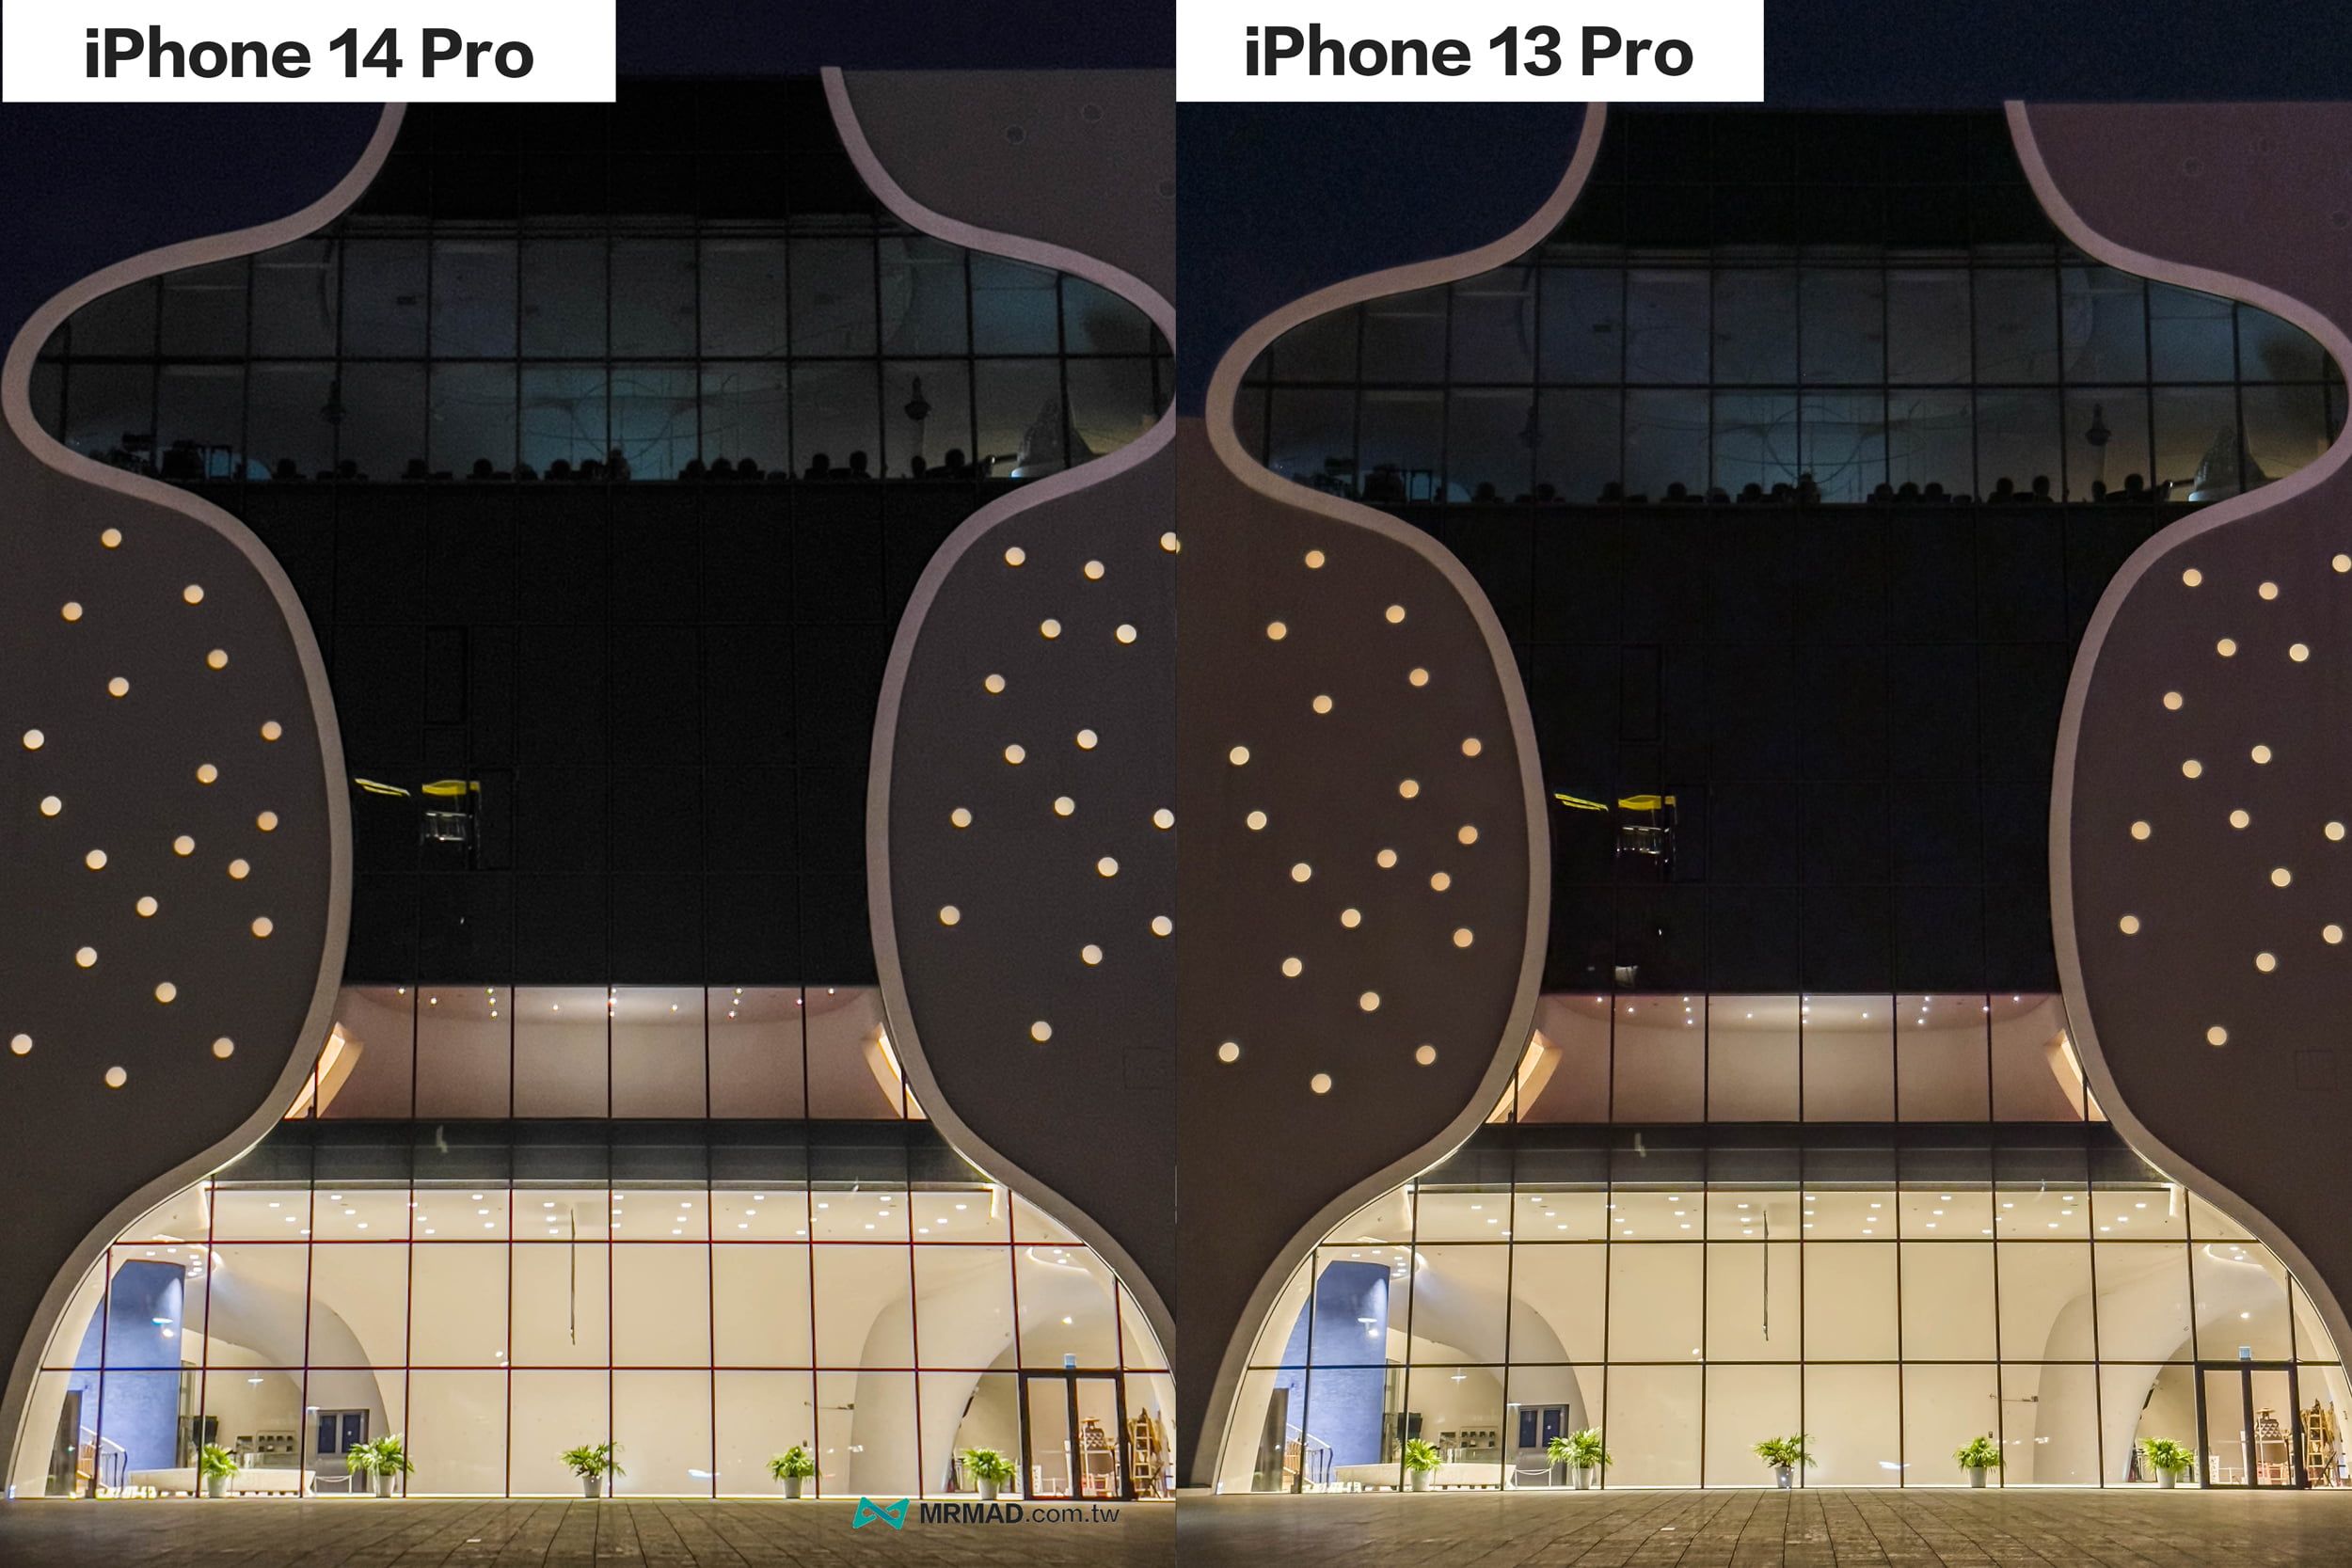 iPhone 14 Pro 2x zoom ProRAW lens night shot comparison